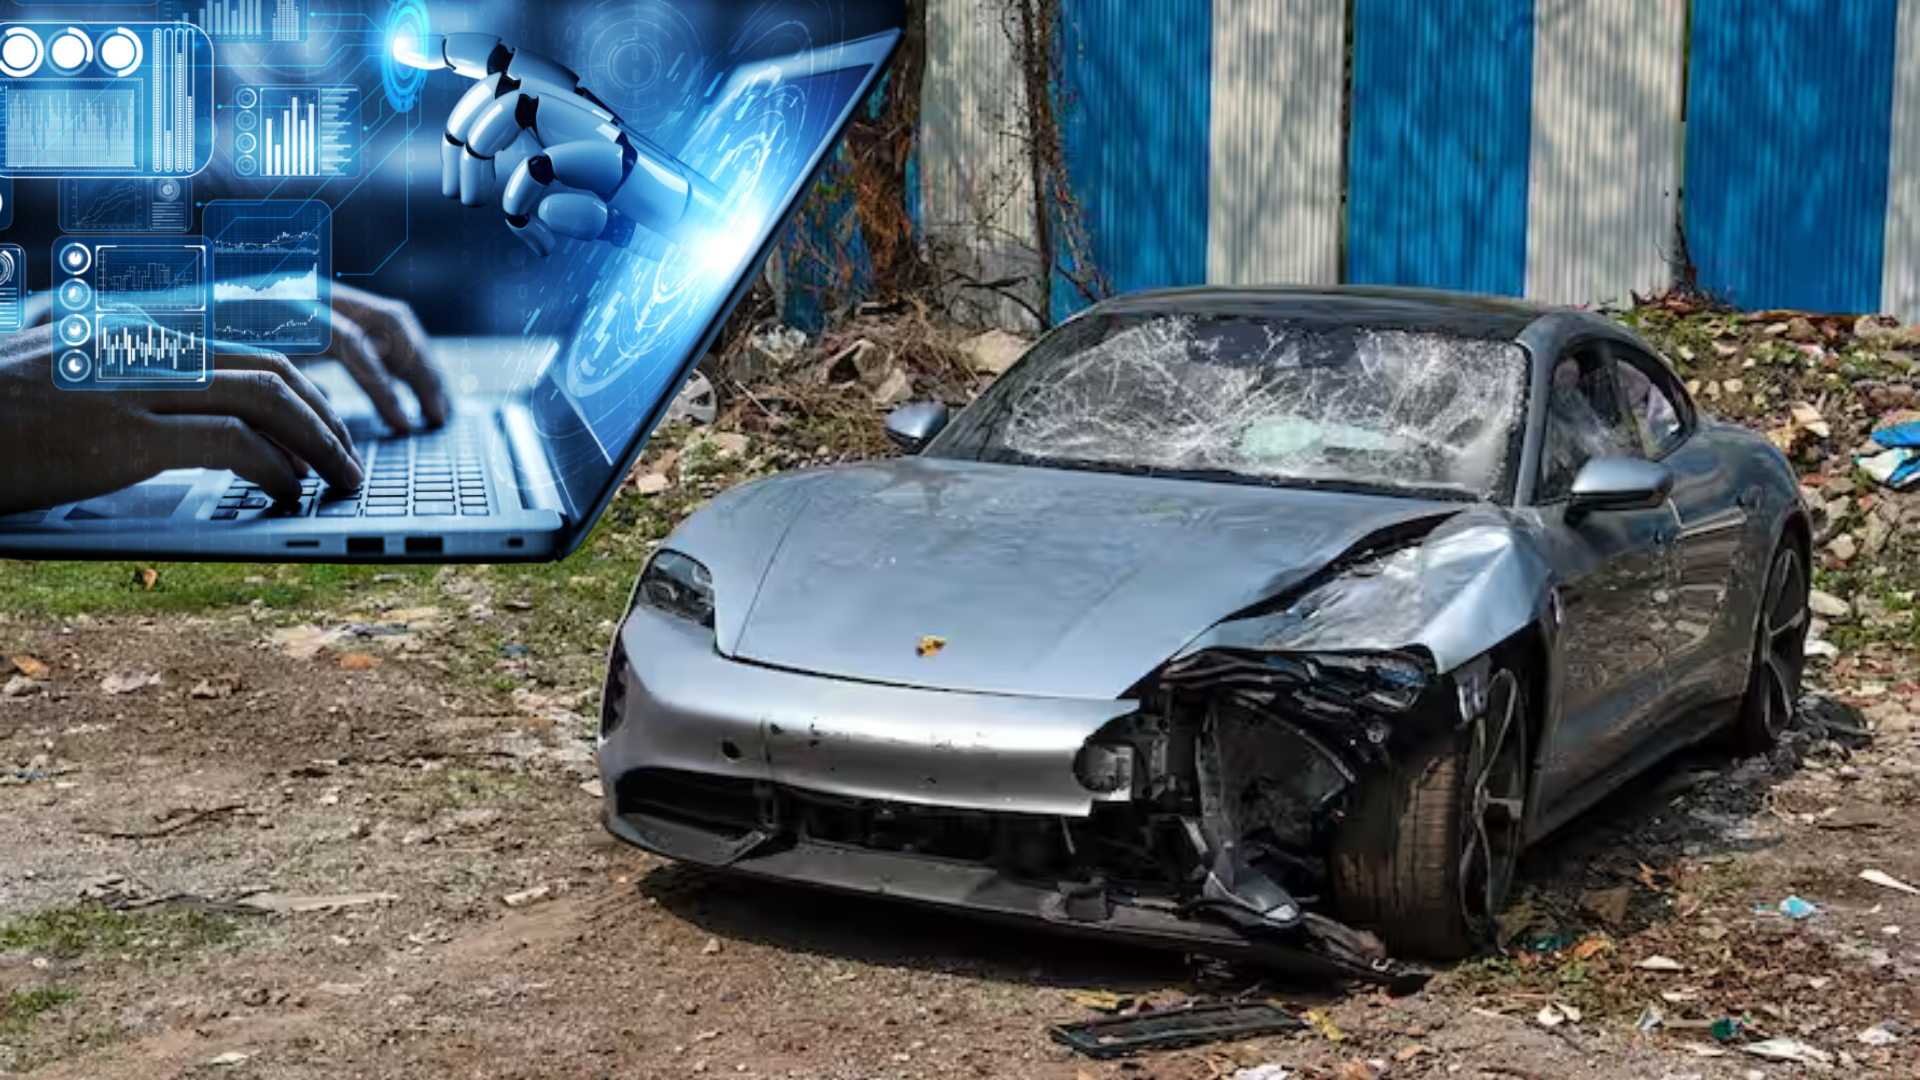 Pune Crime Branch Turns To AI For Digital Reconstruction Of Porsche Car Crash